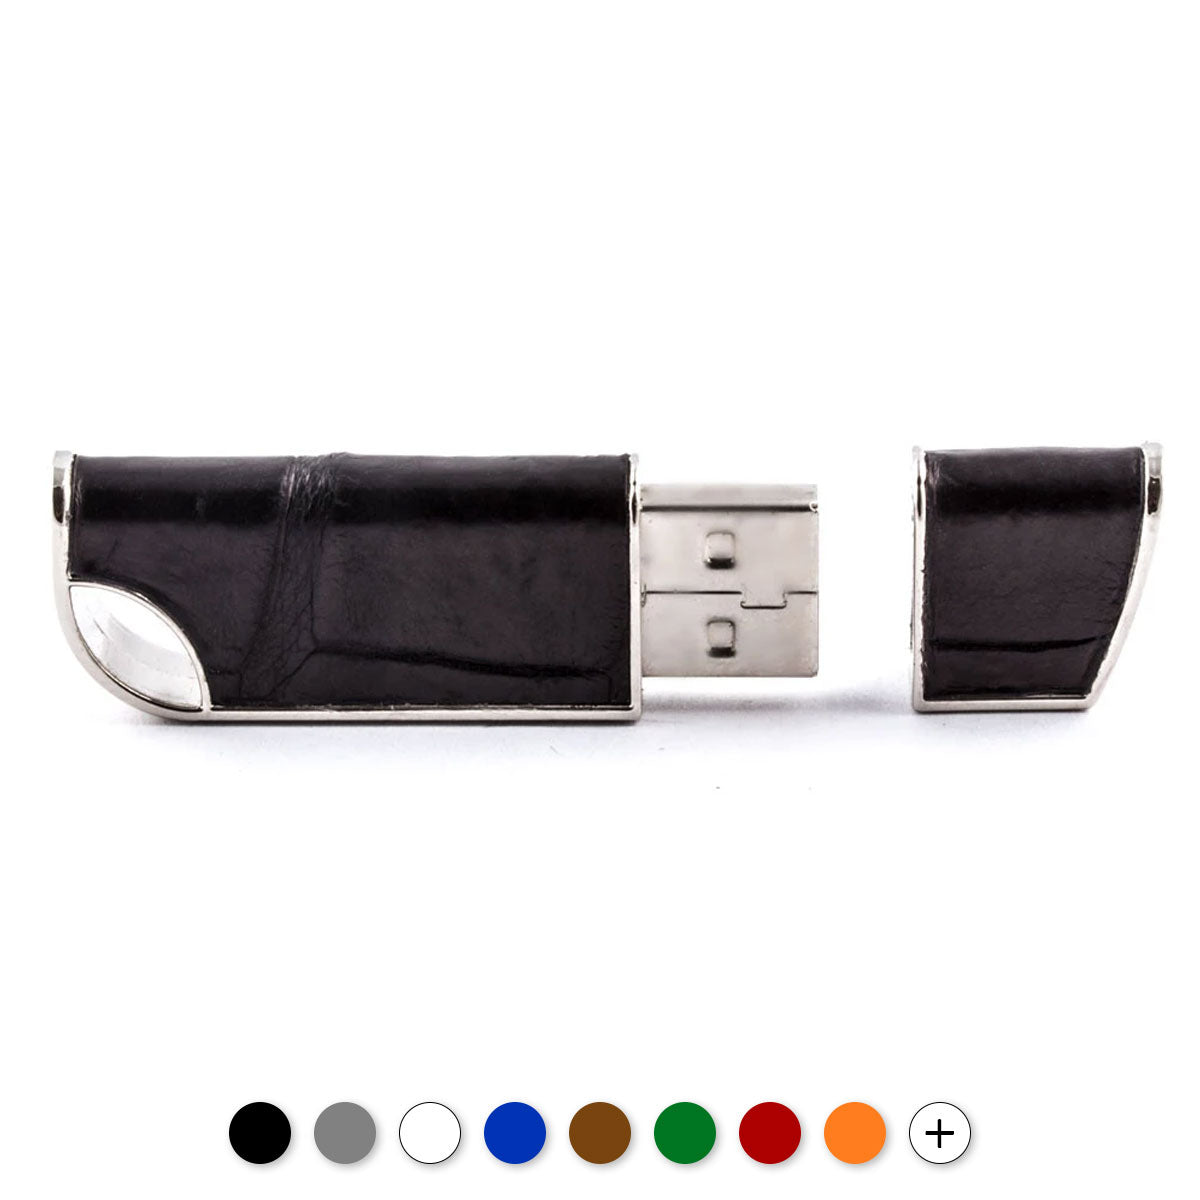 Clé USB - alligator - watch band leather strap - ABP Concept -